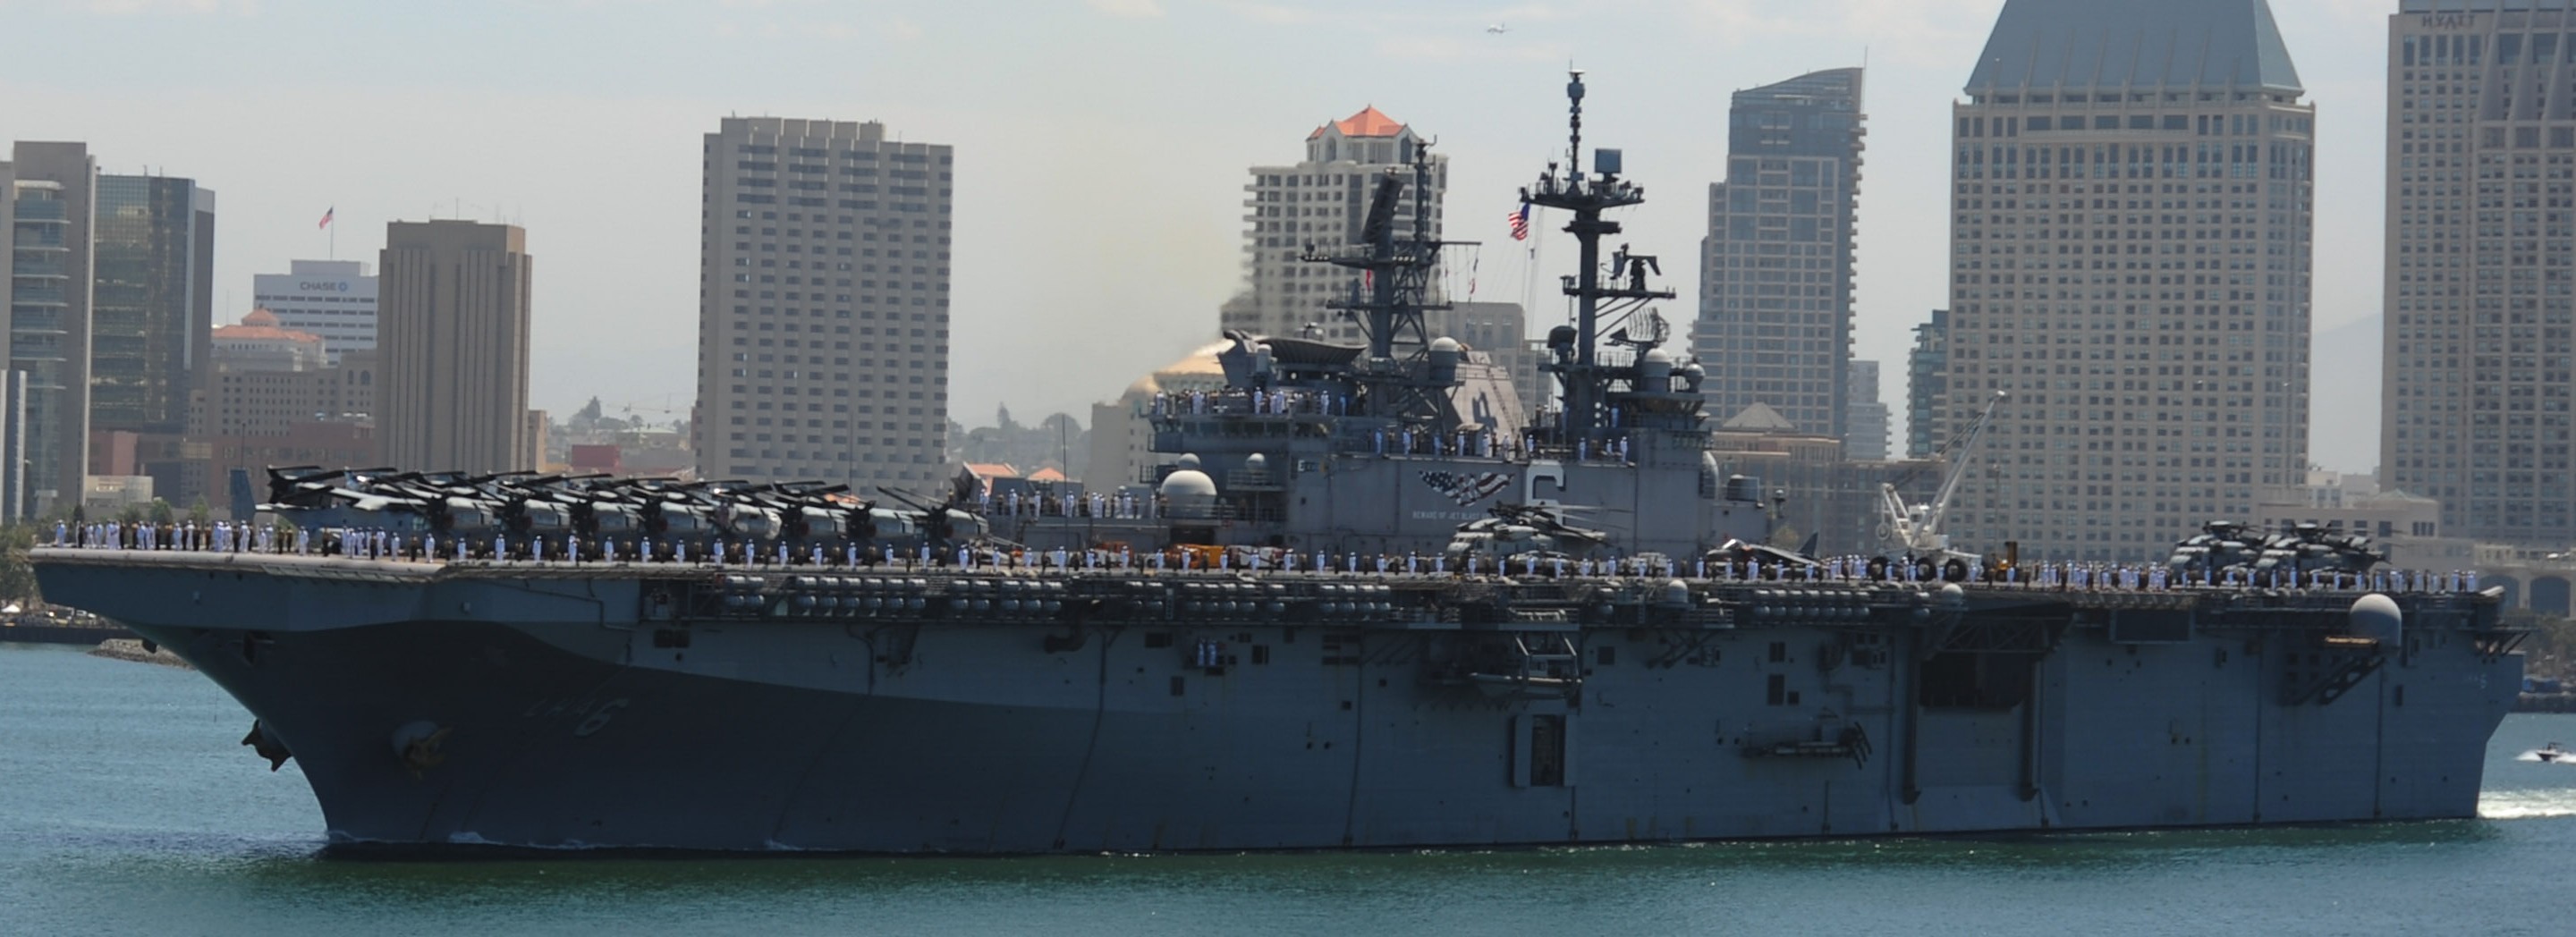 lha-6 uss america amphibious assault ship us navy 50 san diego